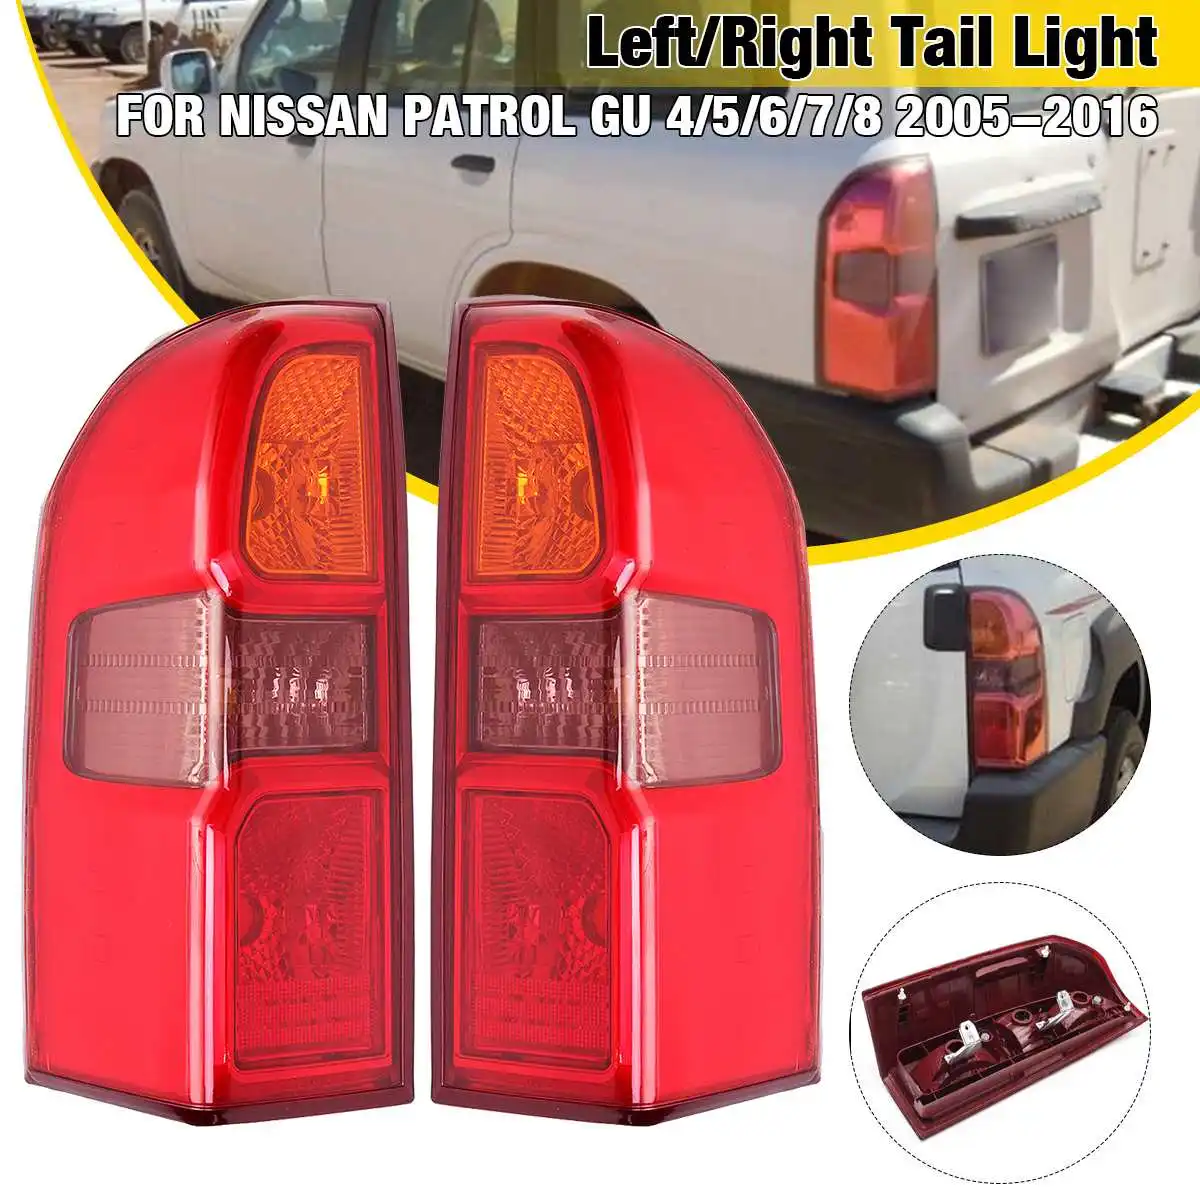 

Rear Left/Right Tail Light Brake Lamp For Nissan Patrol GU 4/5/6/7/8 2005-2016 Tail Light Assembly